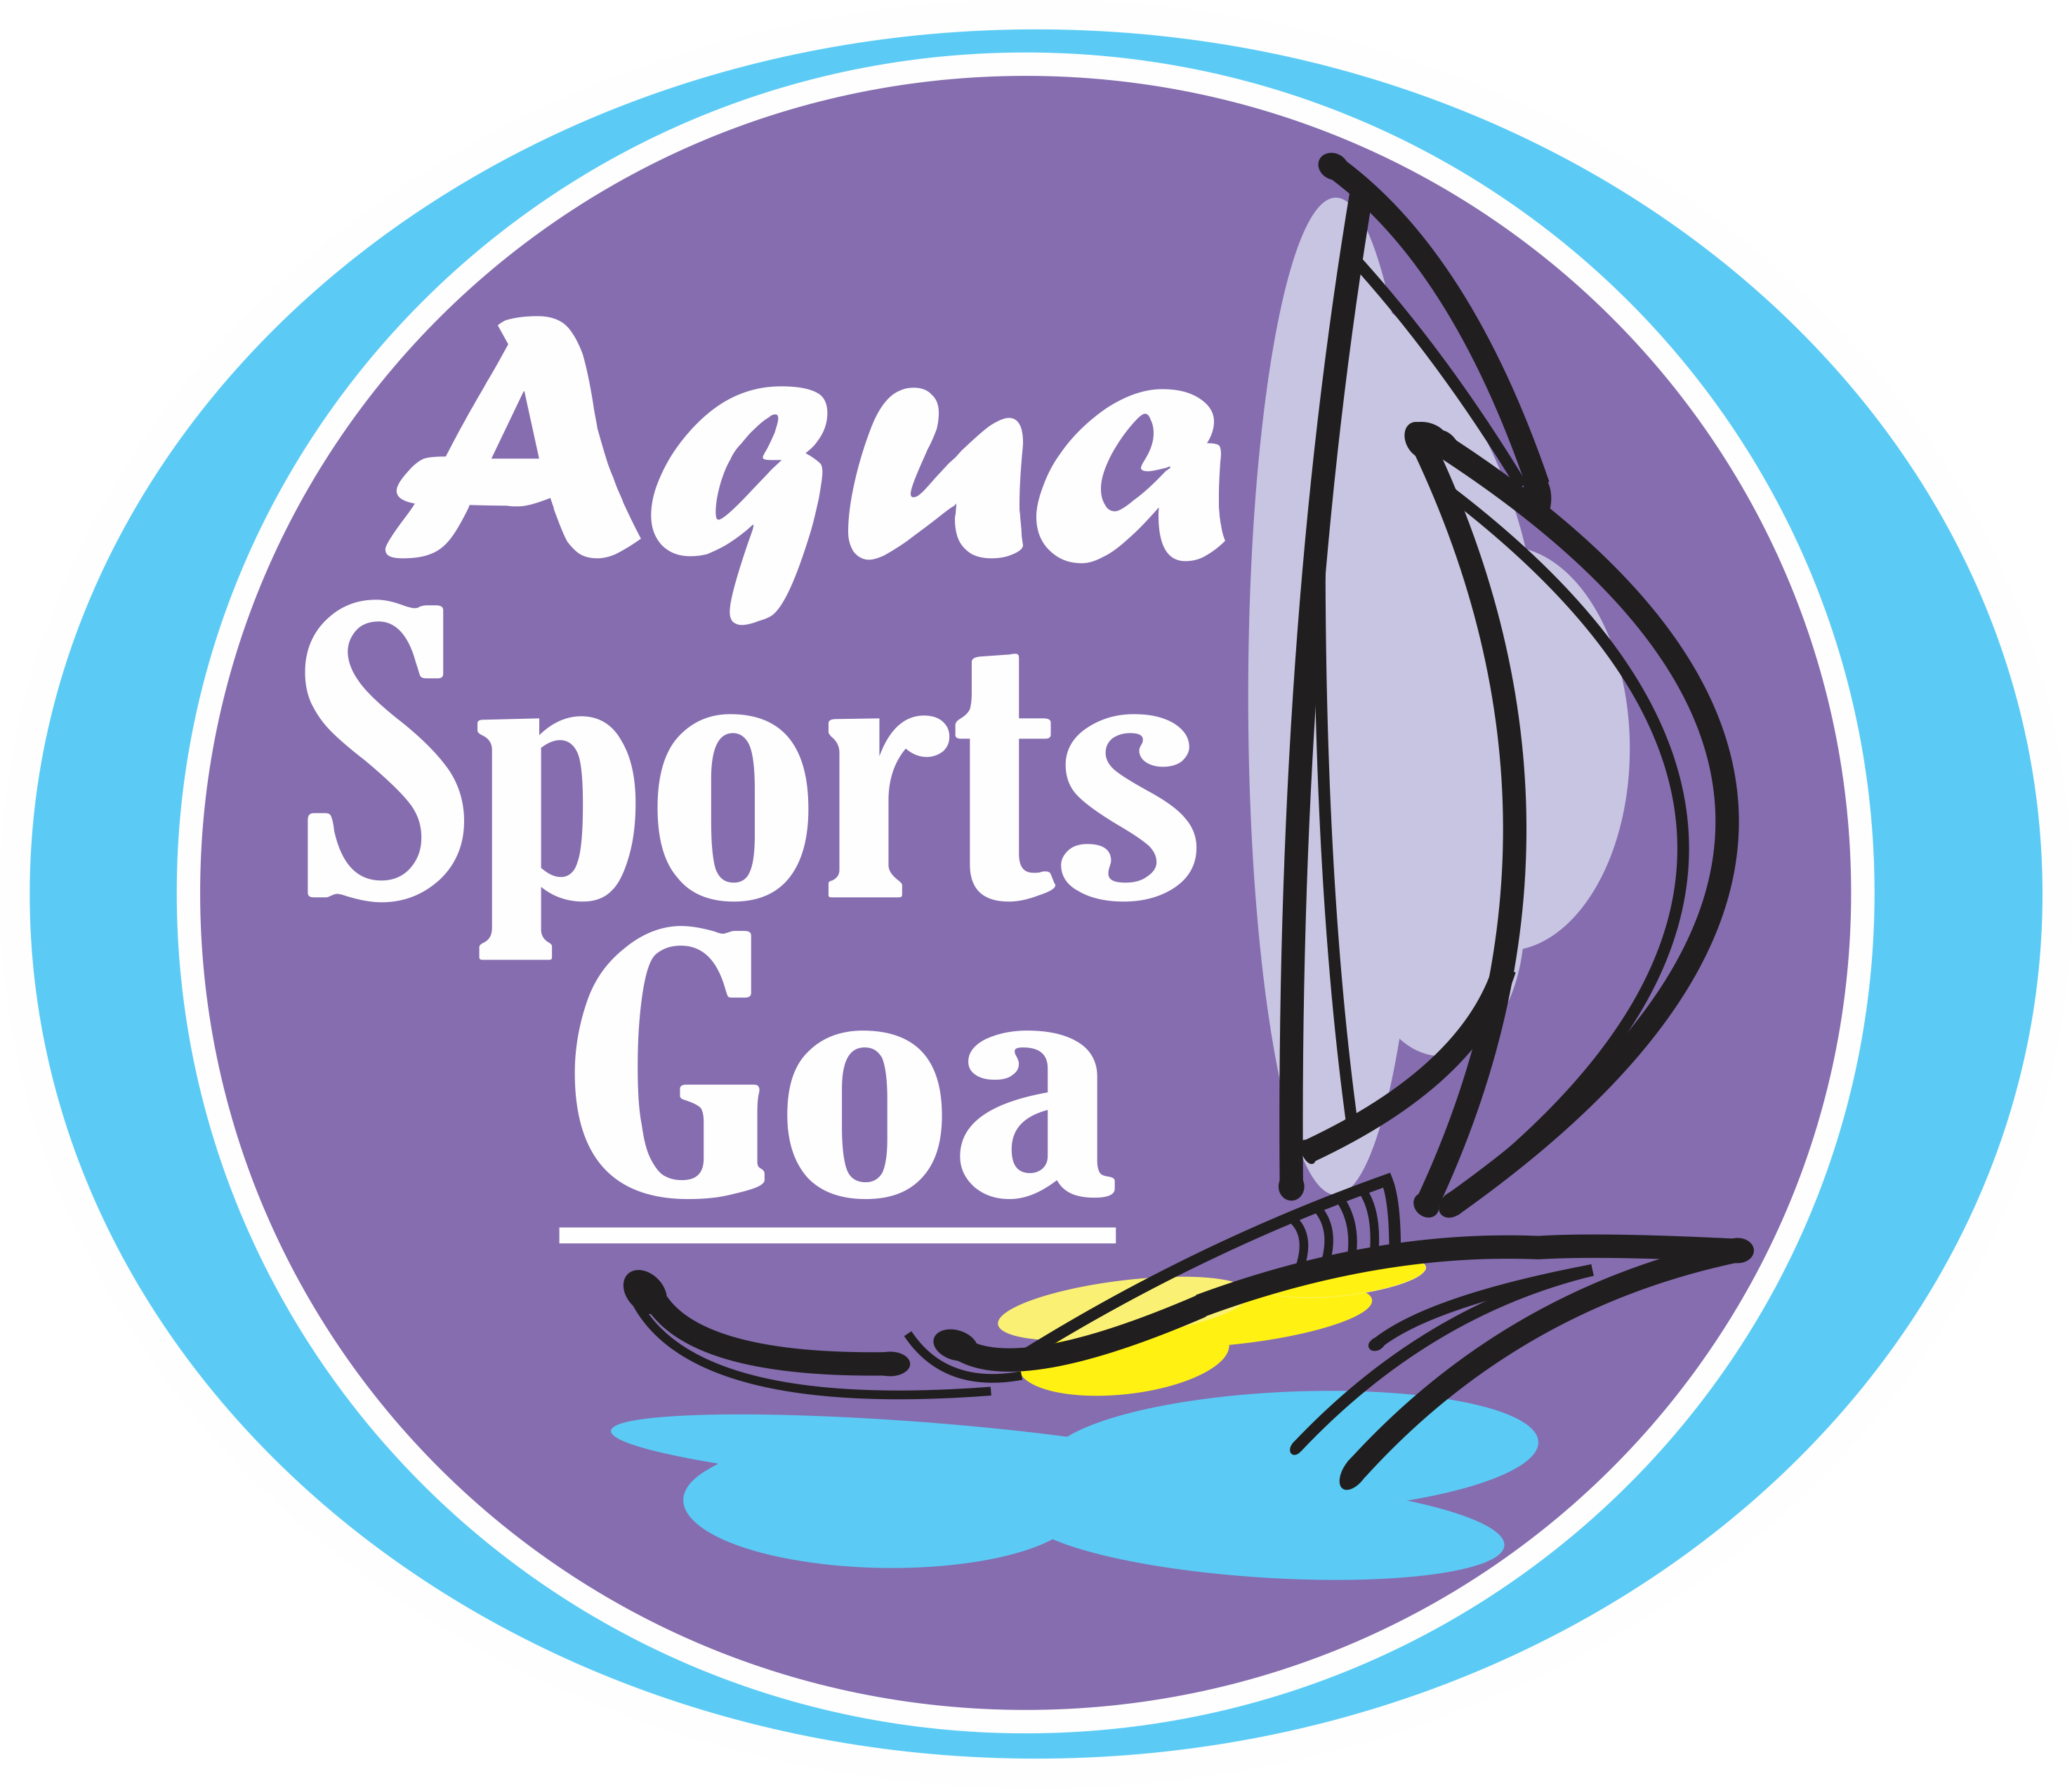 Aqua Sports Goa